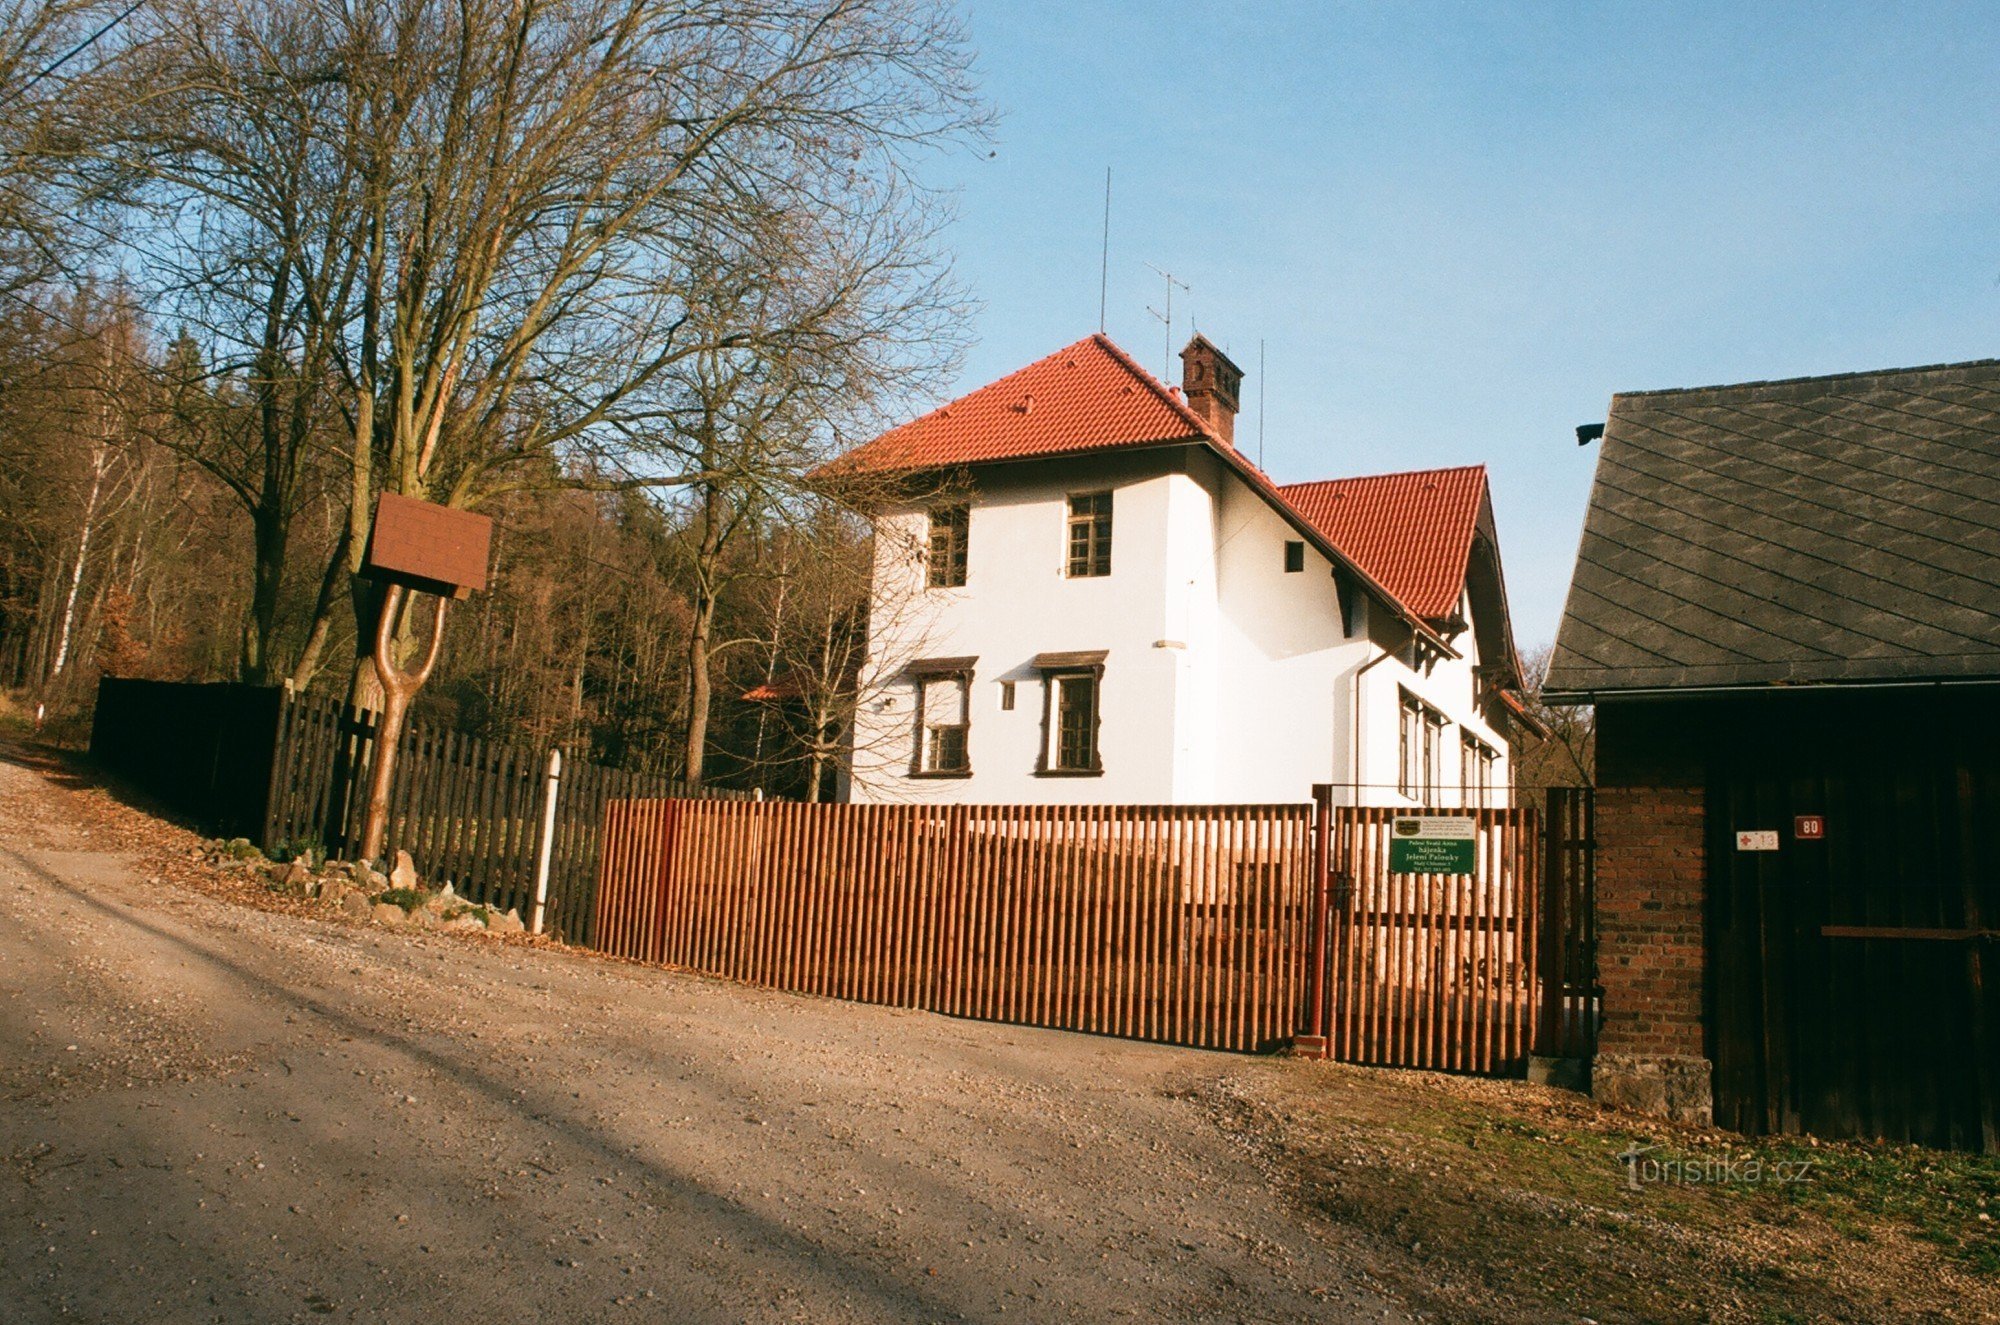 Jelení palouky reserva de caça perto de Hradec